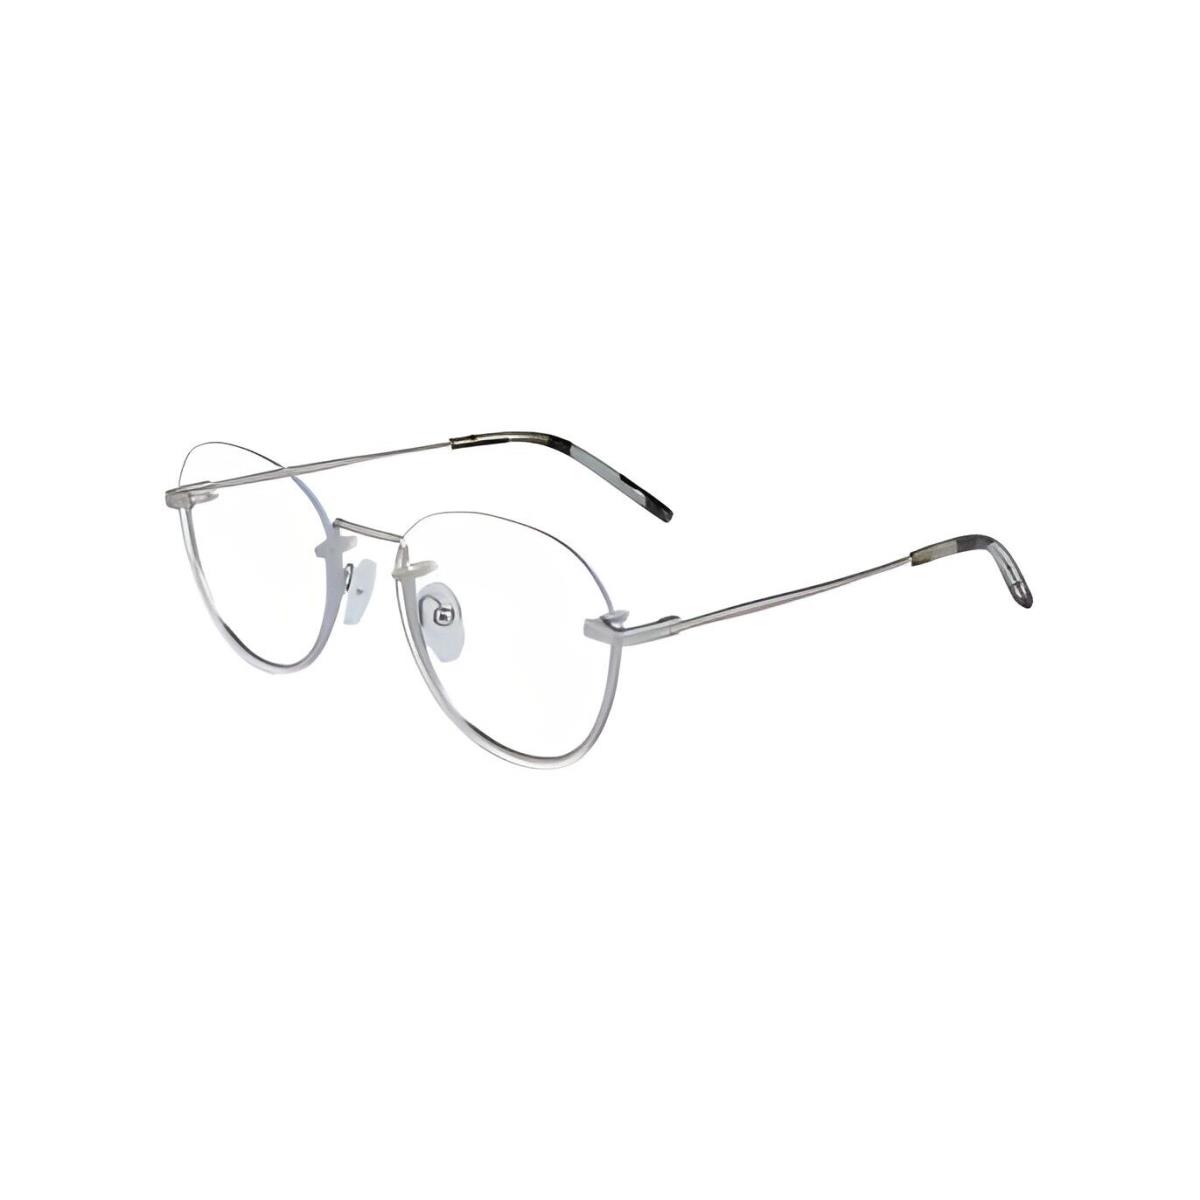 Dkny Eyeglasses - DK1000 030 - Silver 52-17-135